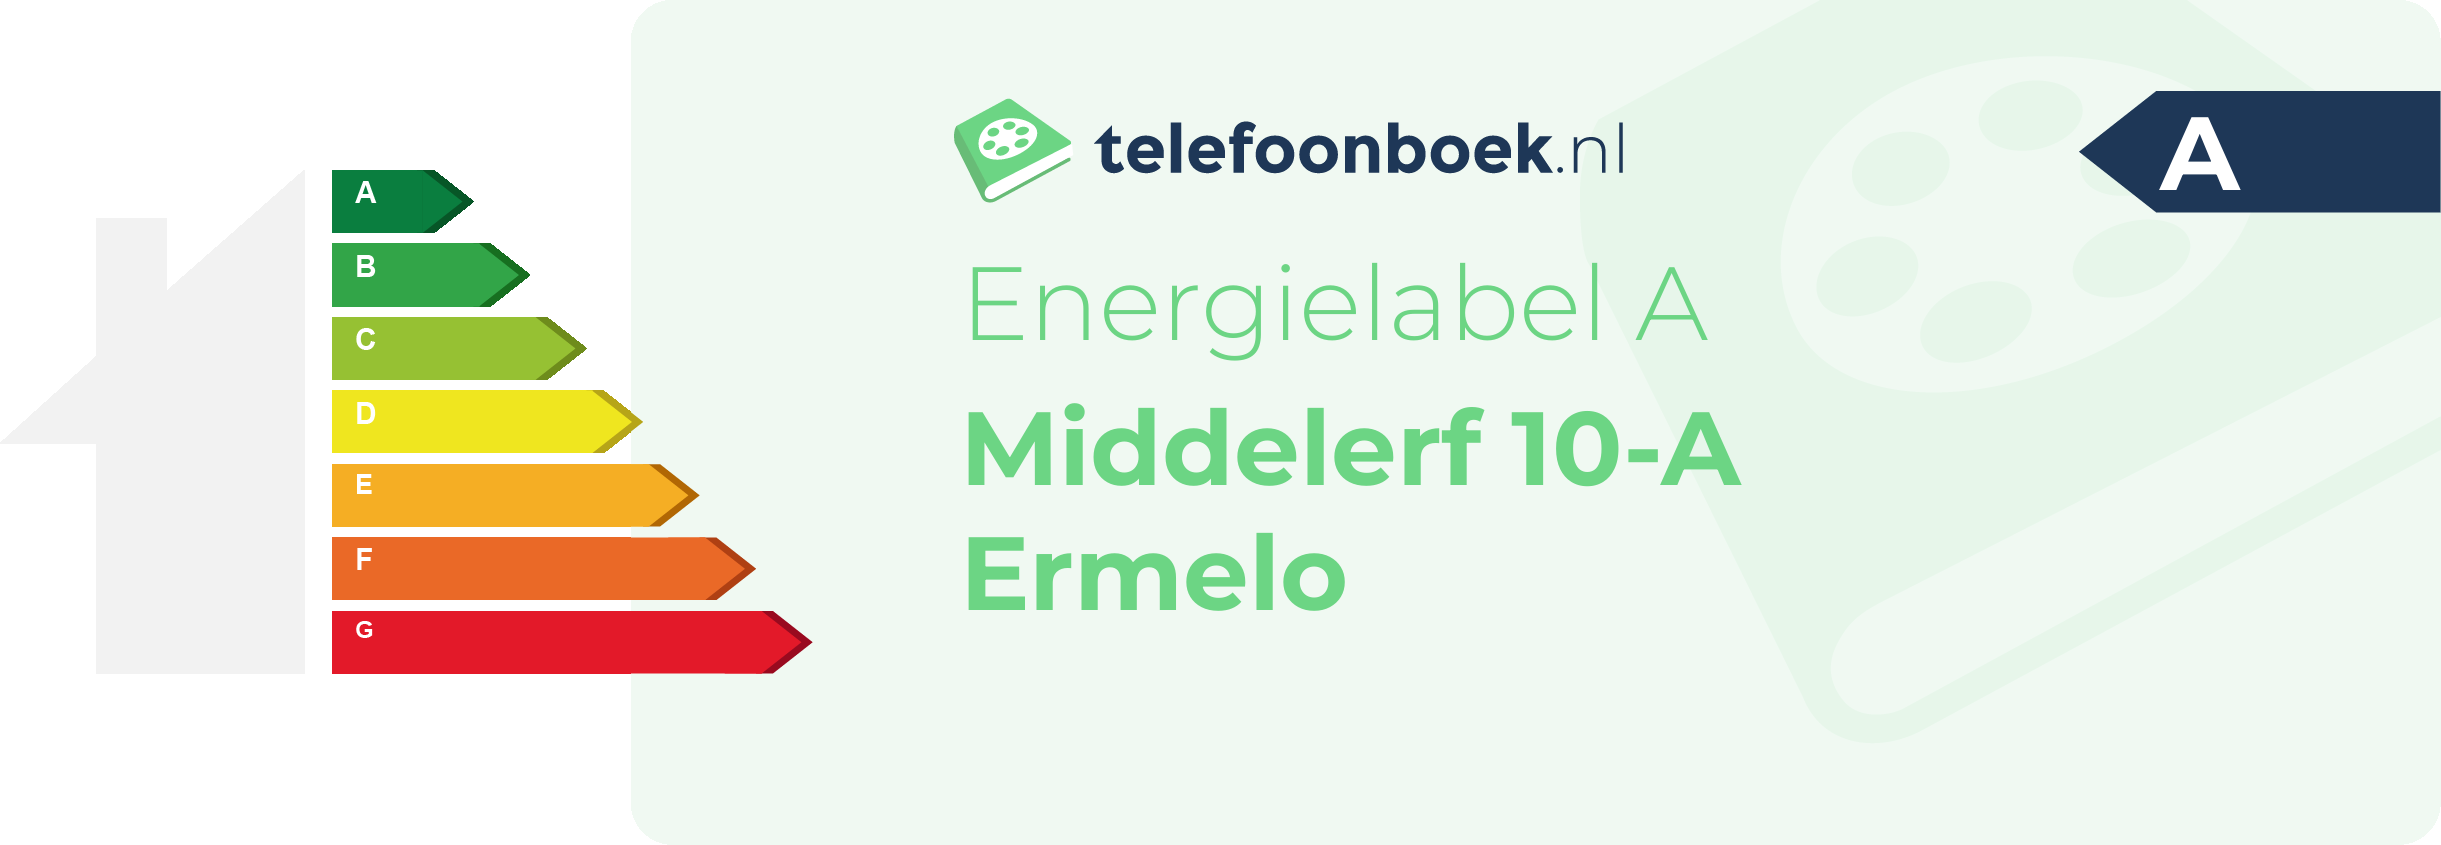 Energielabel Middelerf 10-A Ermelo